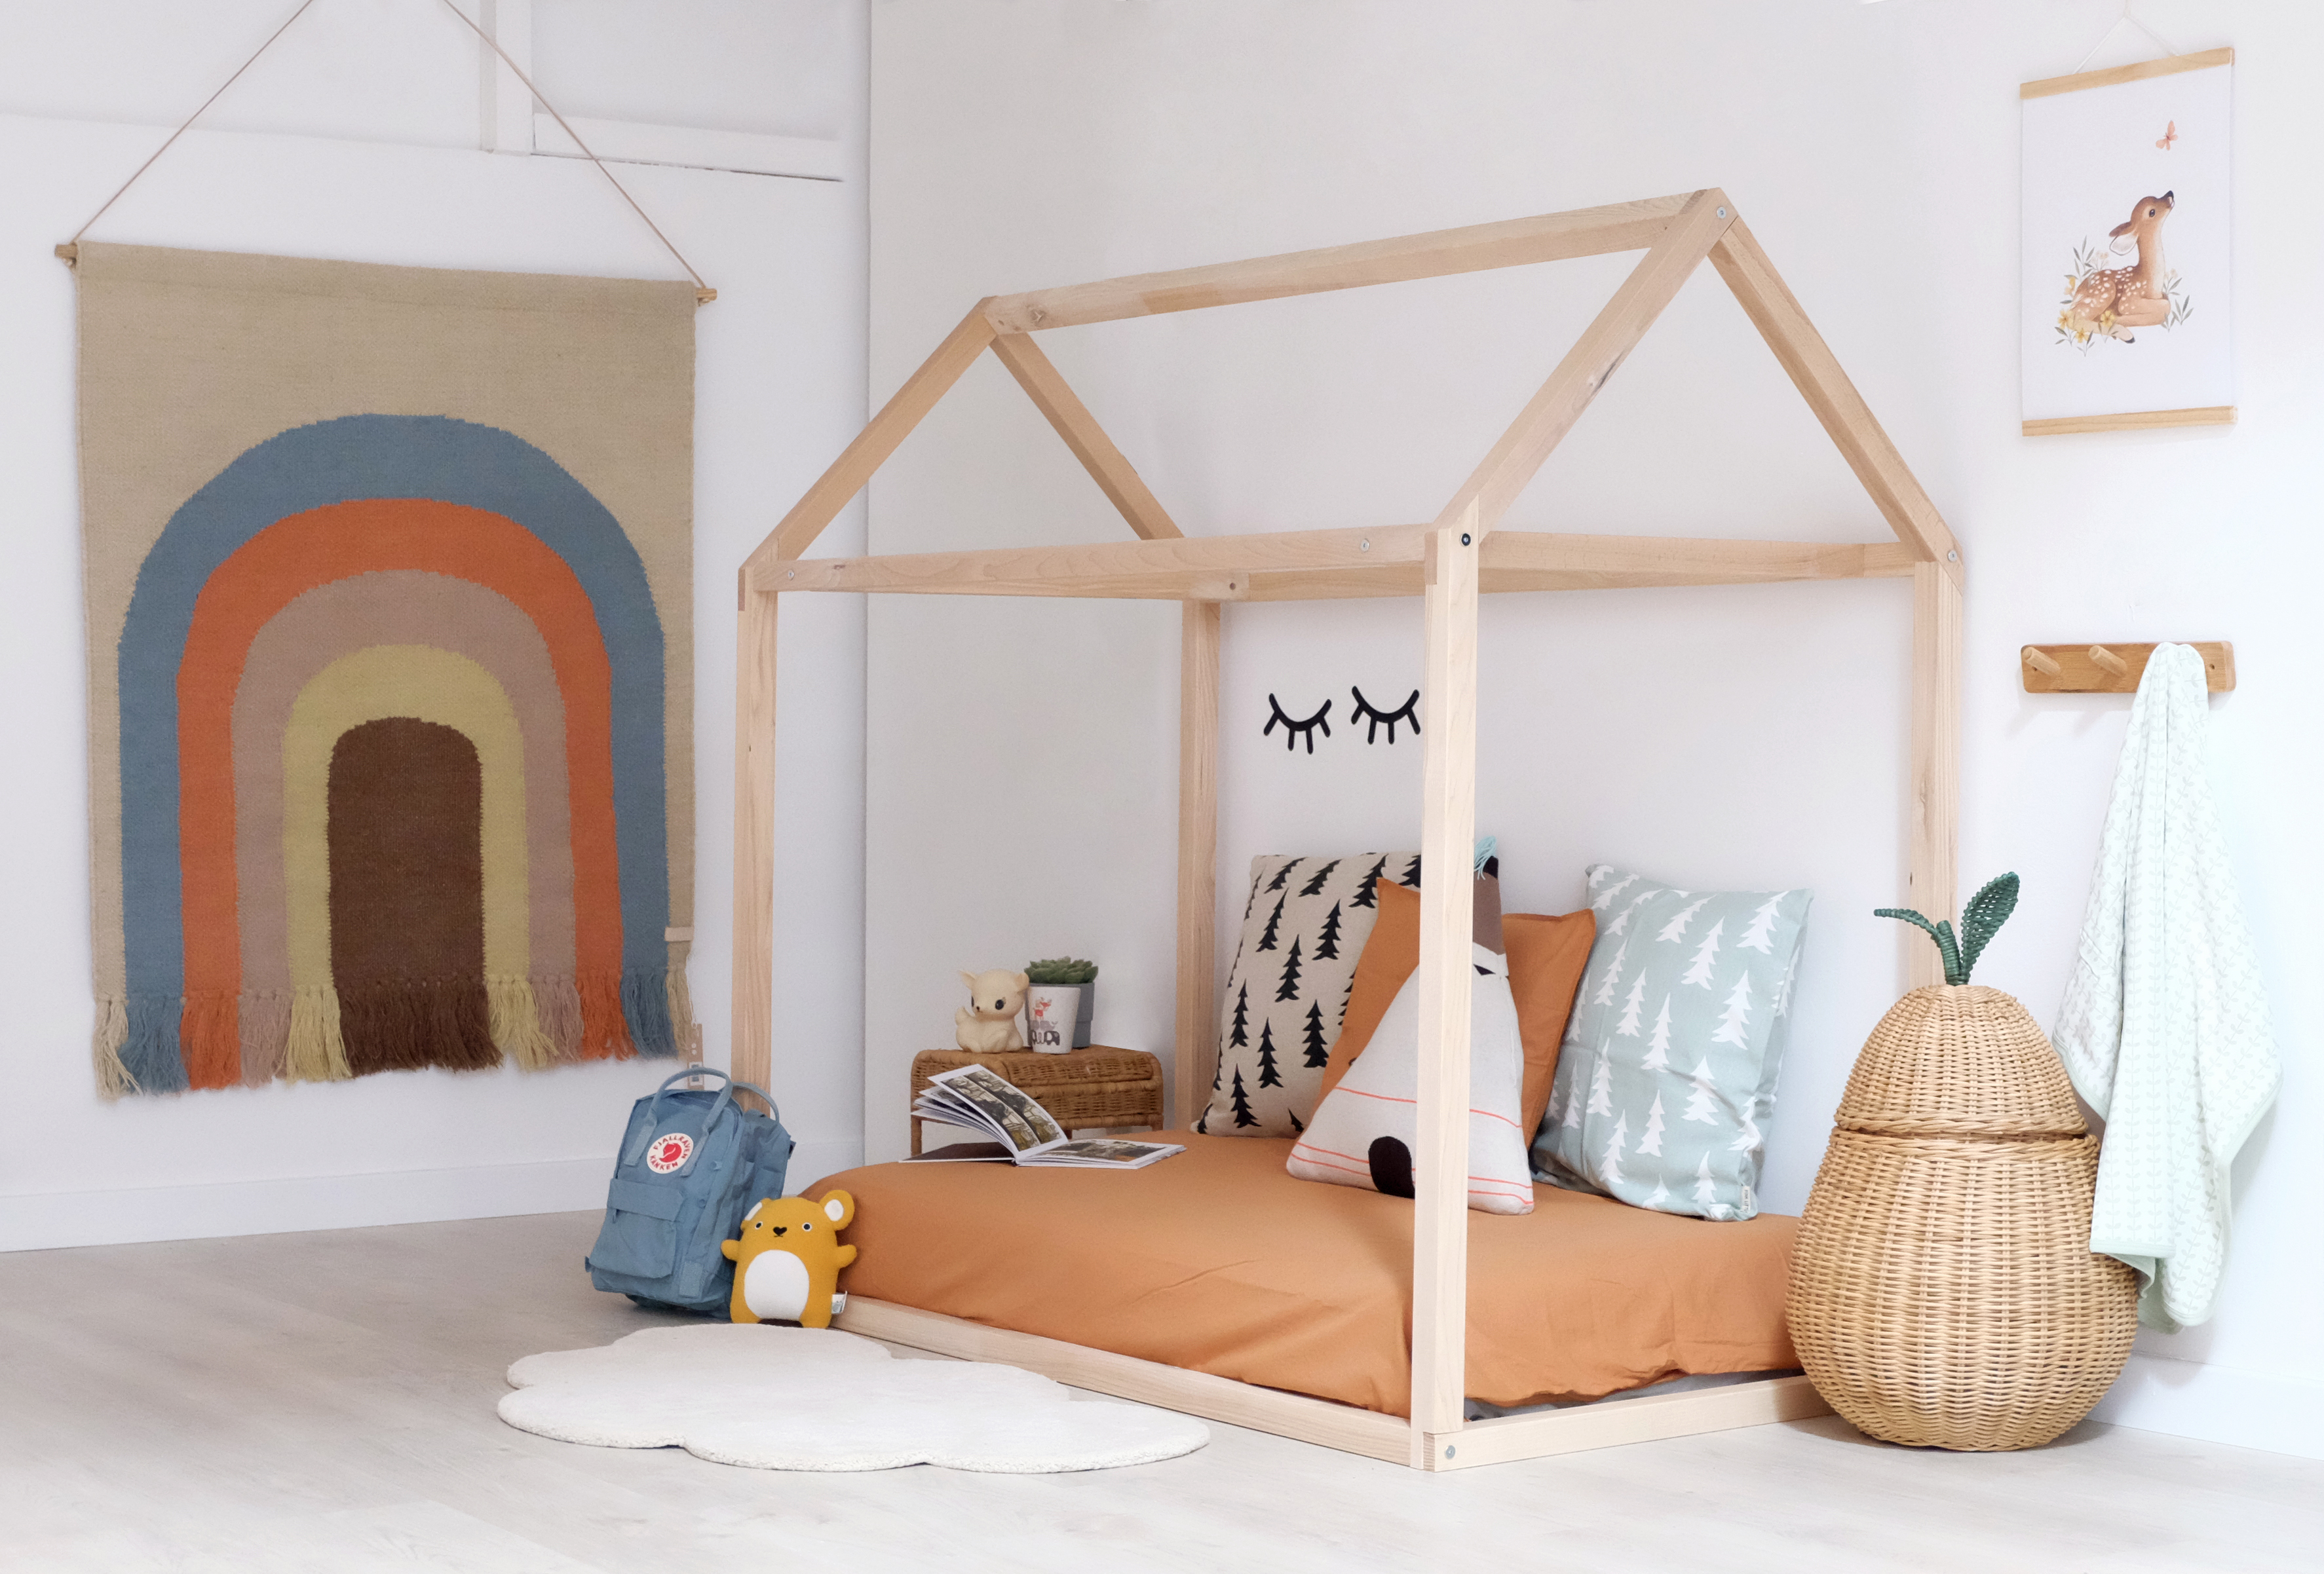 Cama casita infantil de madera inspirada en Método Montessori